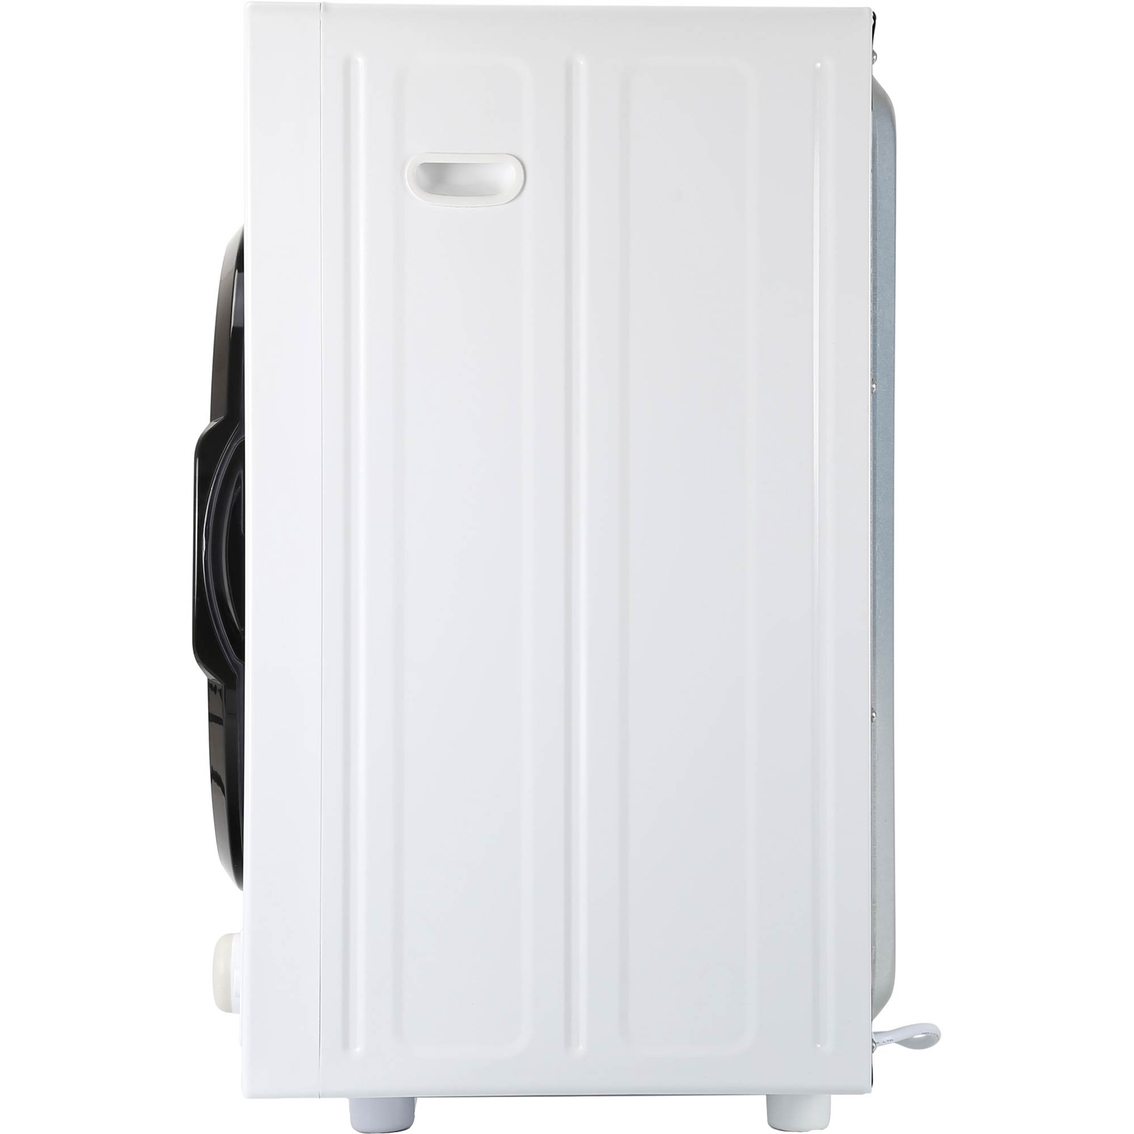  BLACK+DECKER BCED37 Compact Dryer for Standard Wall